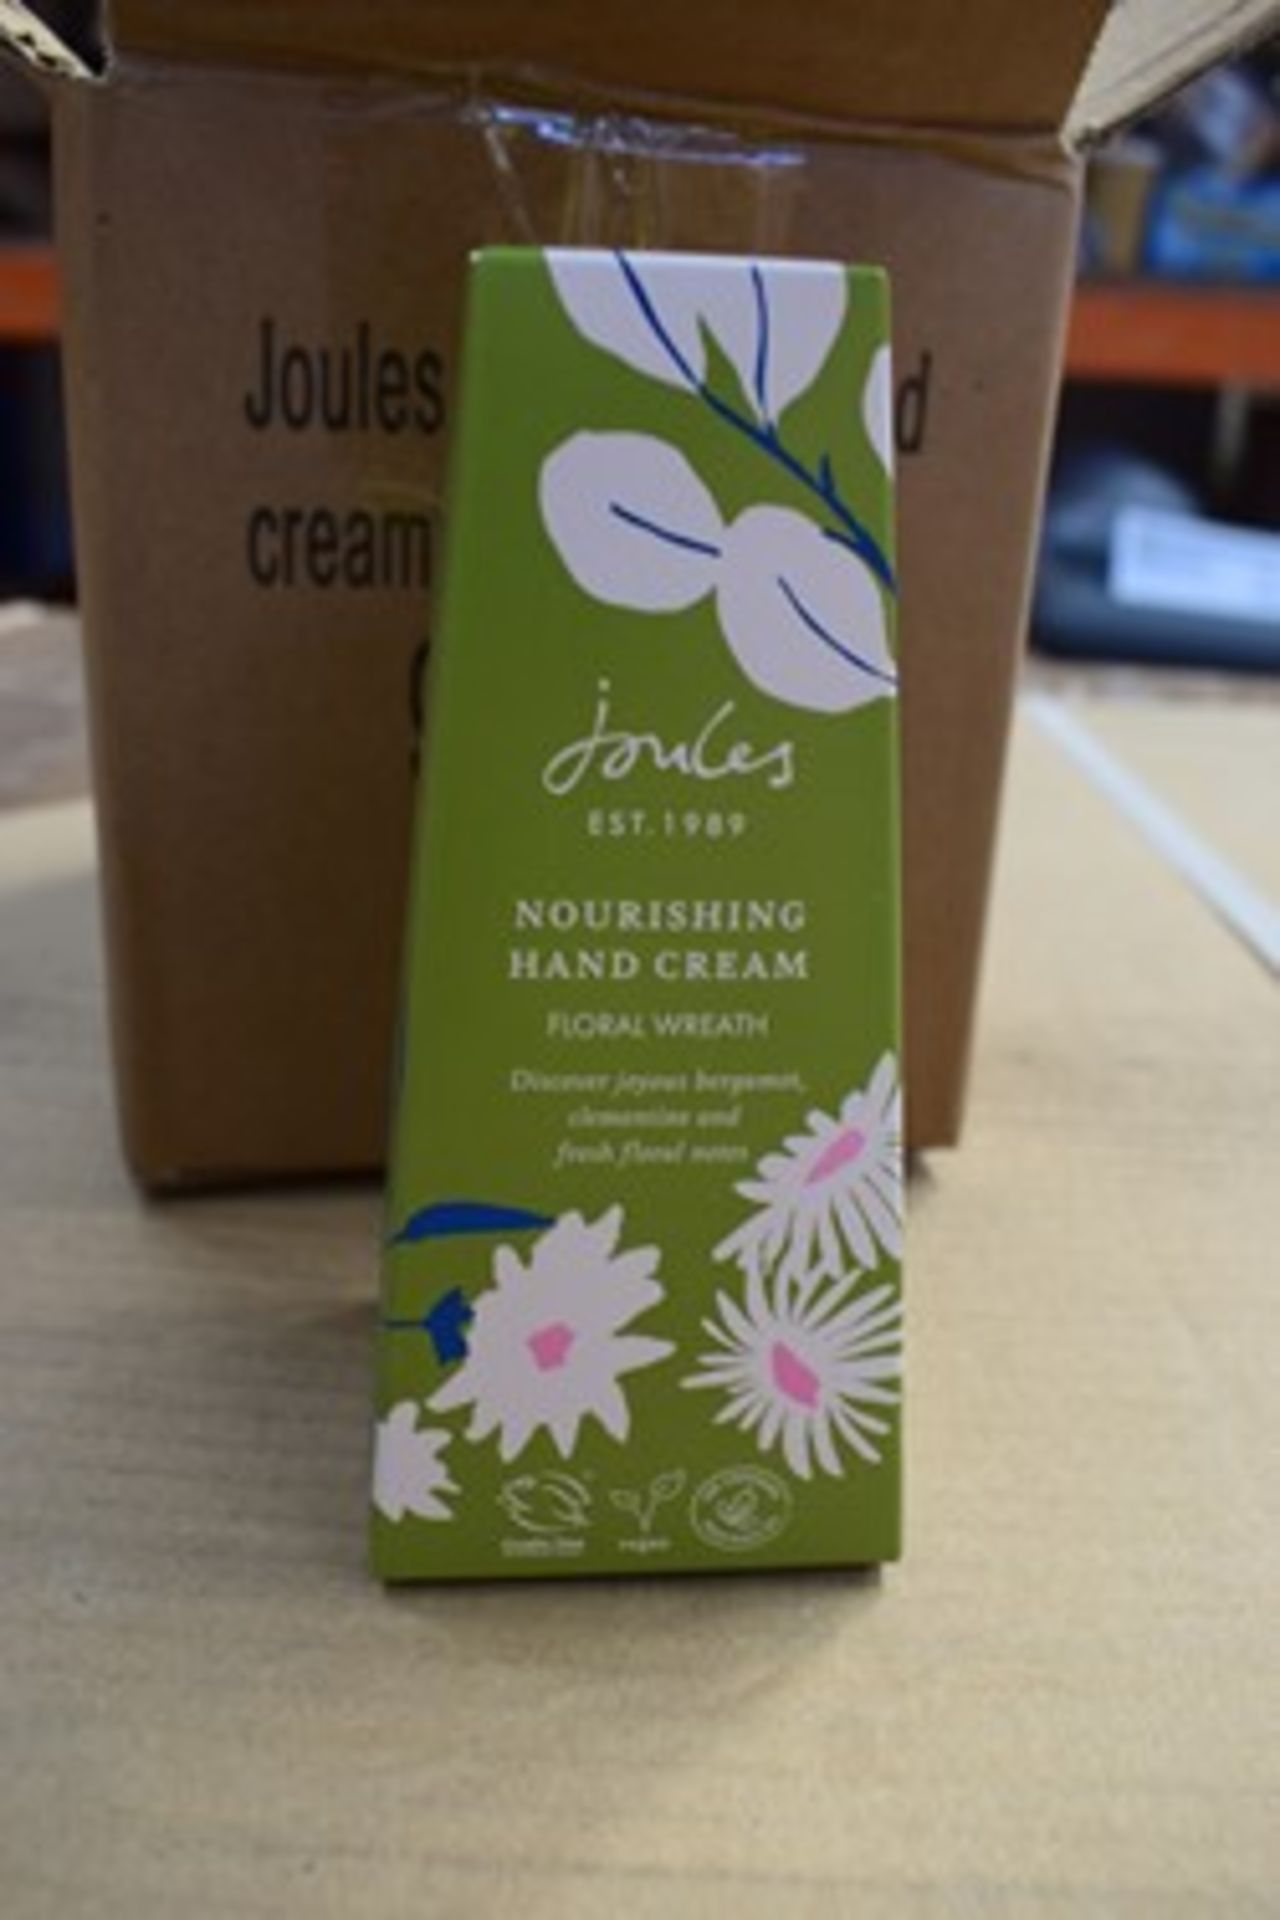 18 x 50ml tubes of Joules, nourishing hand cream, EAN: 5045099008570 - new in box (C11)